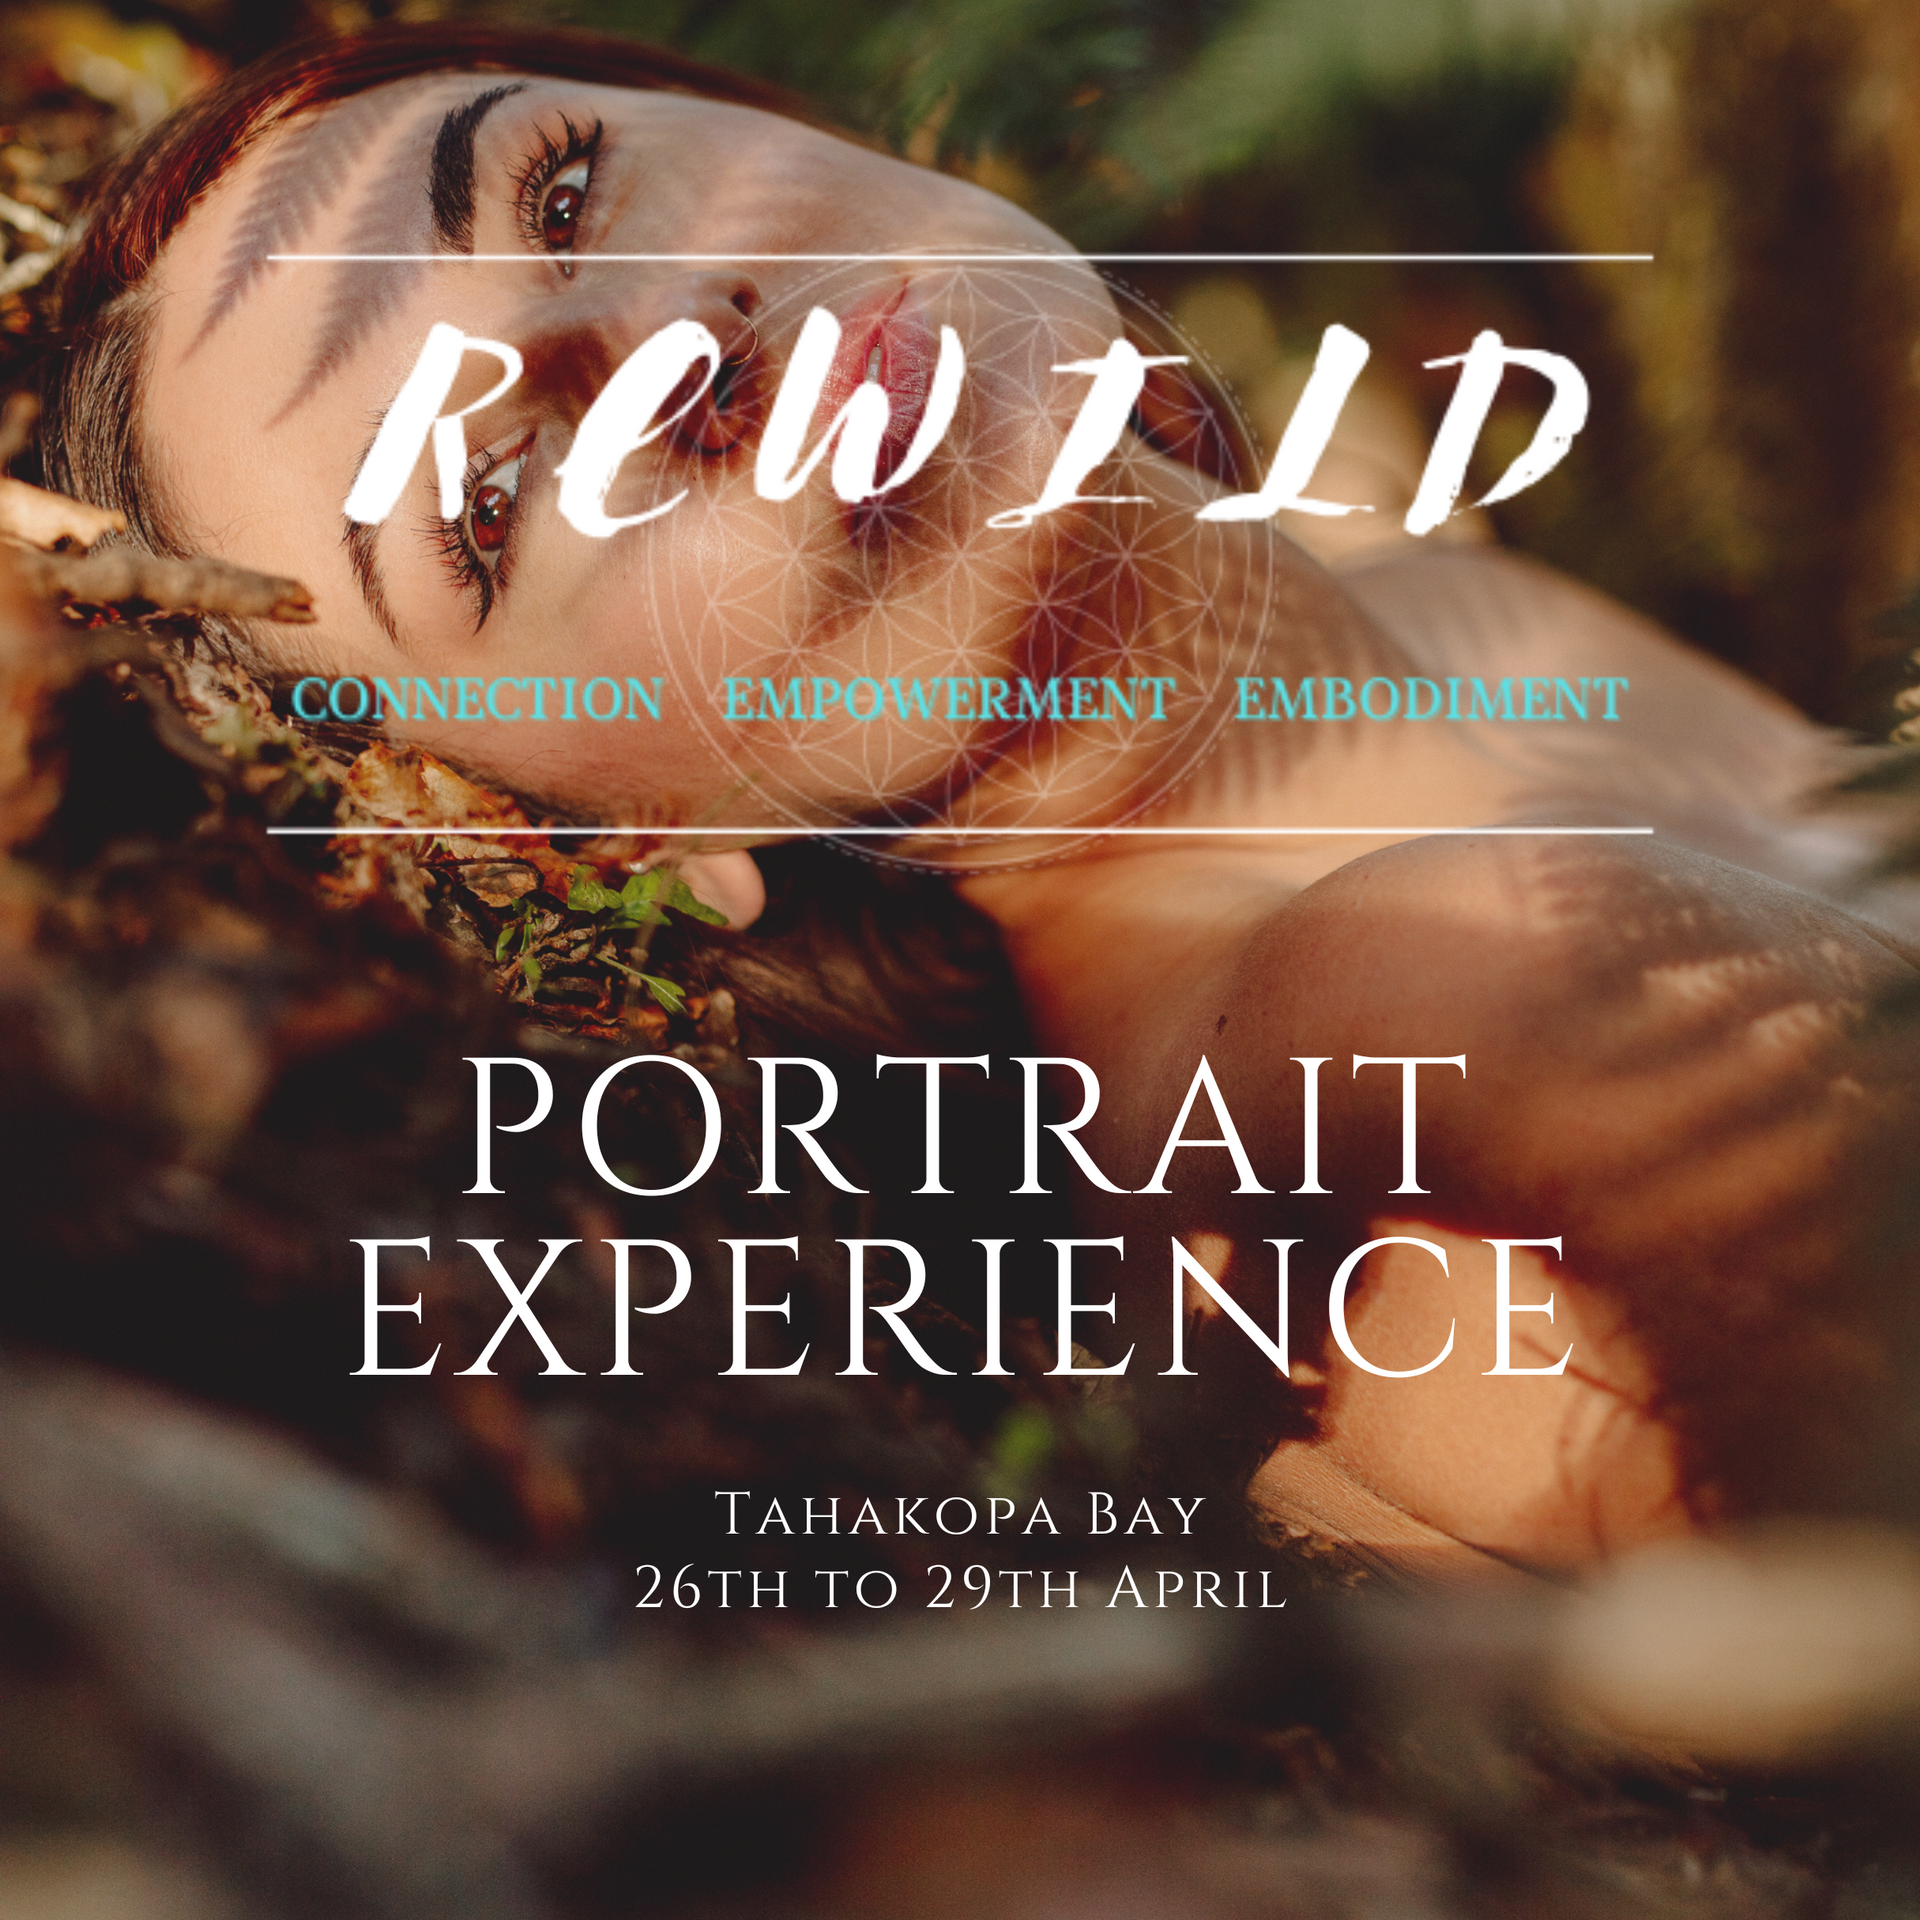 Rewild Portrait Experience: The Wild Catlins